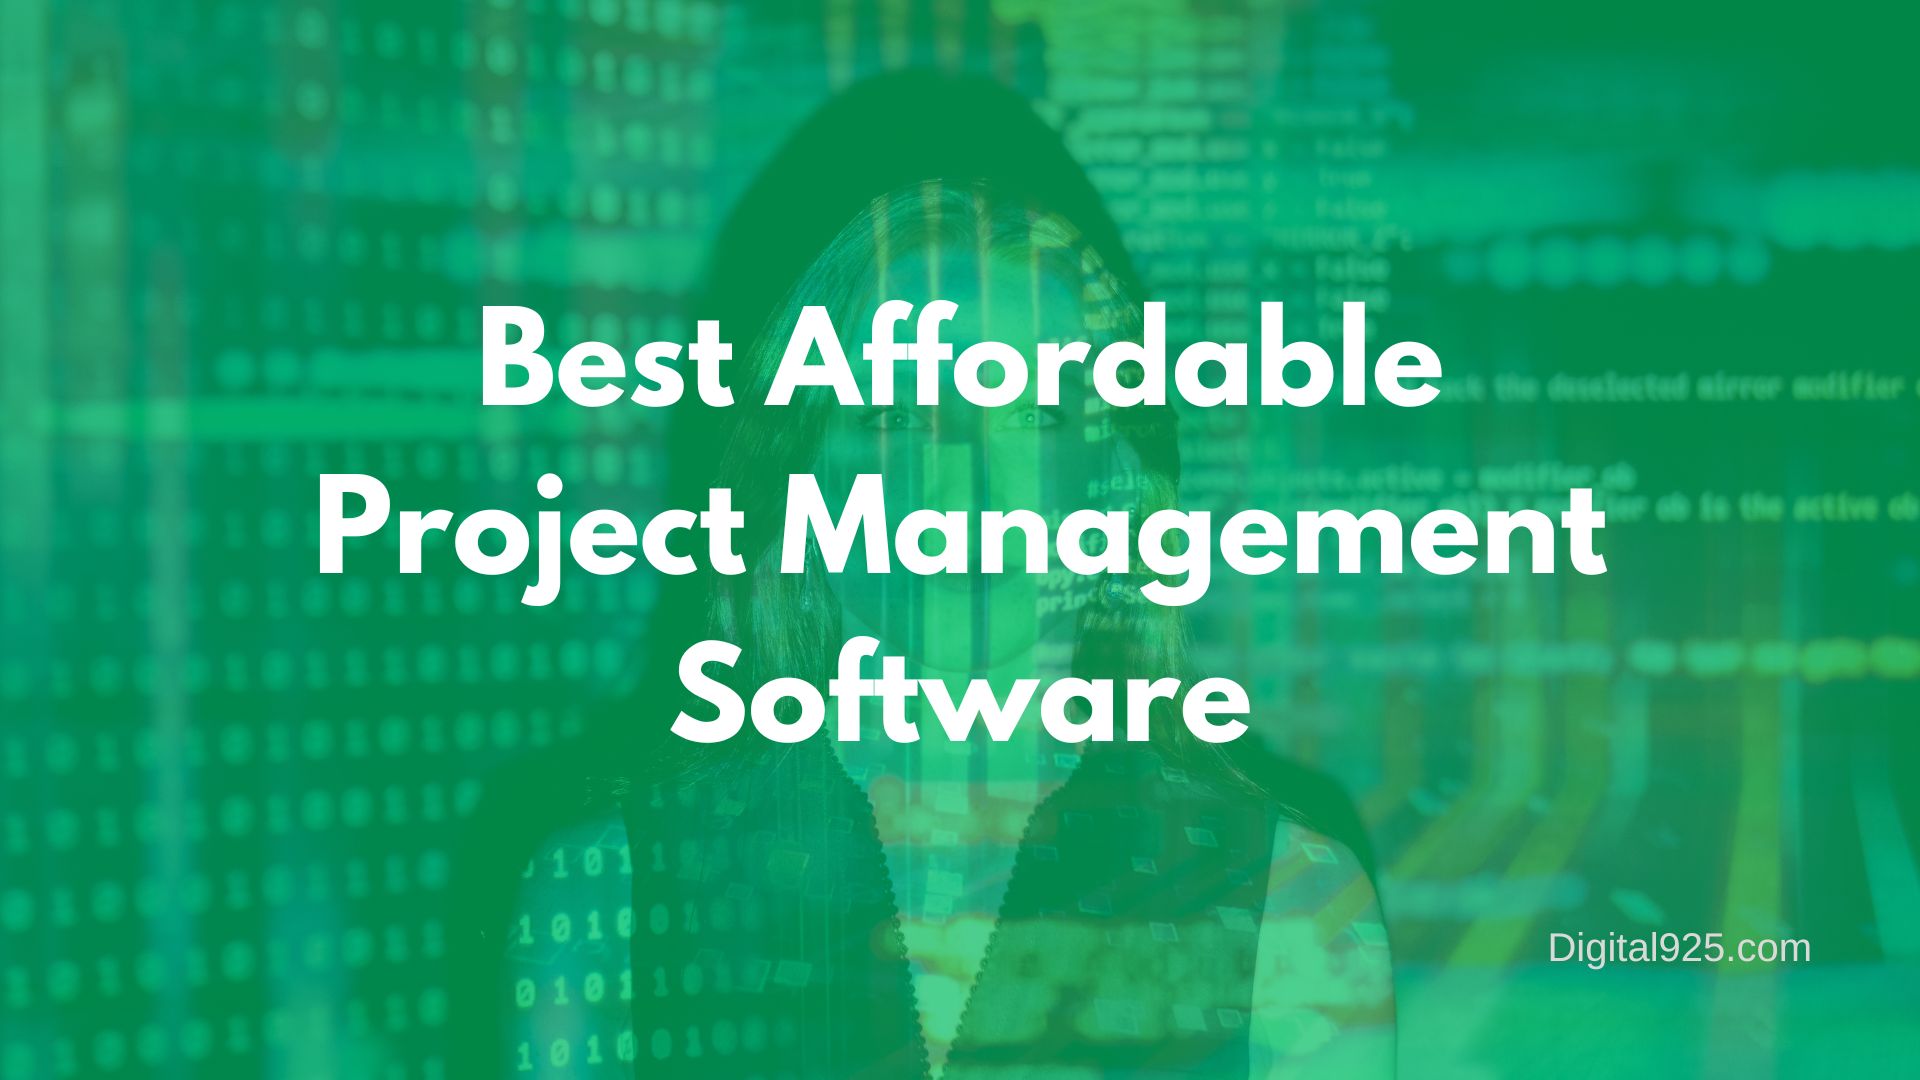 8 Best Affordable Project Management Software